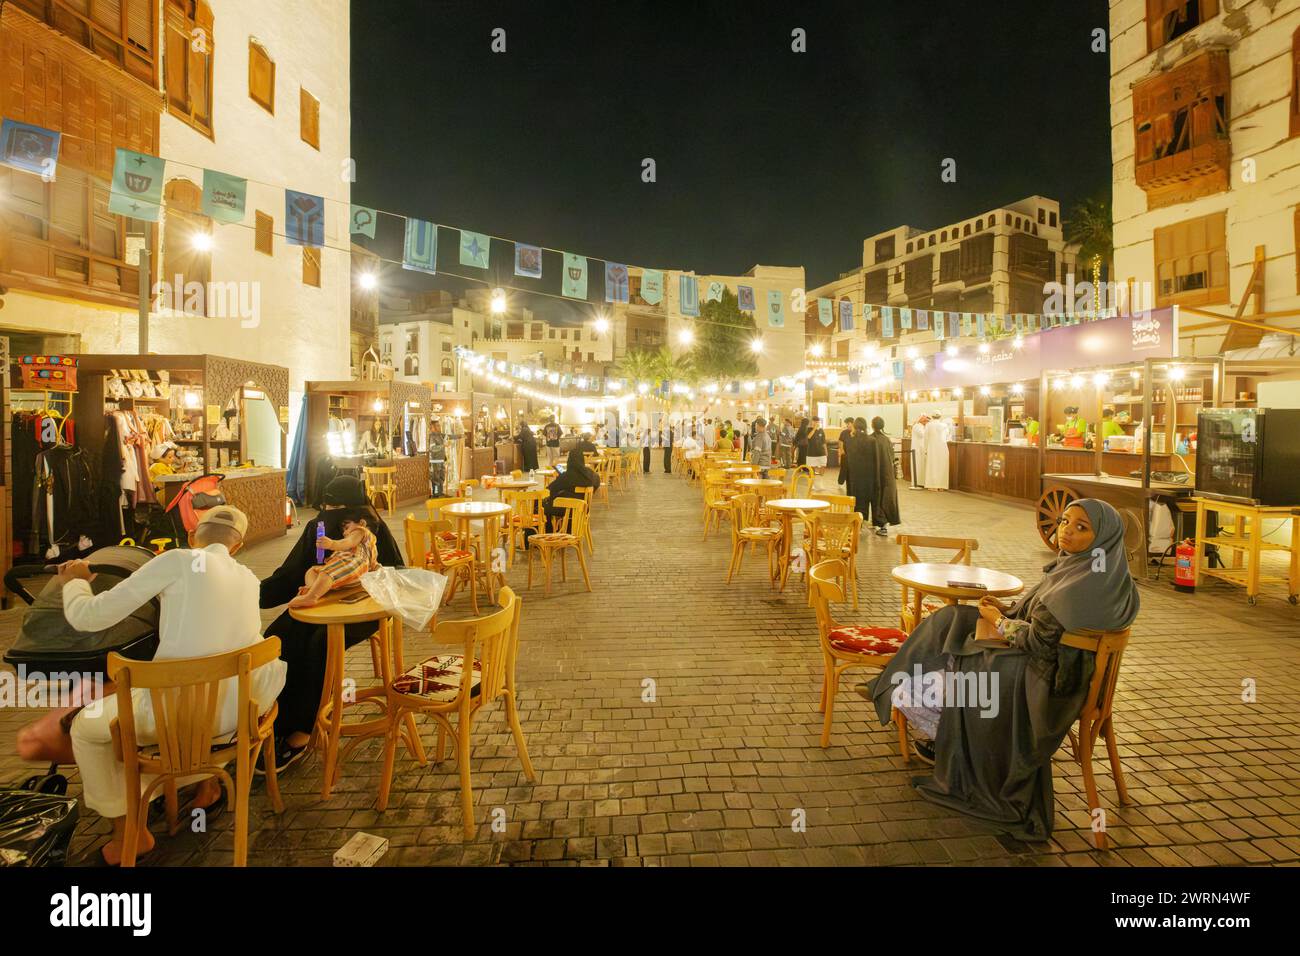 Historical urban scene with outdoor cafe setting, Jeddah, Saudi Arabia Stock Photo